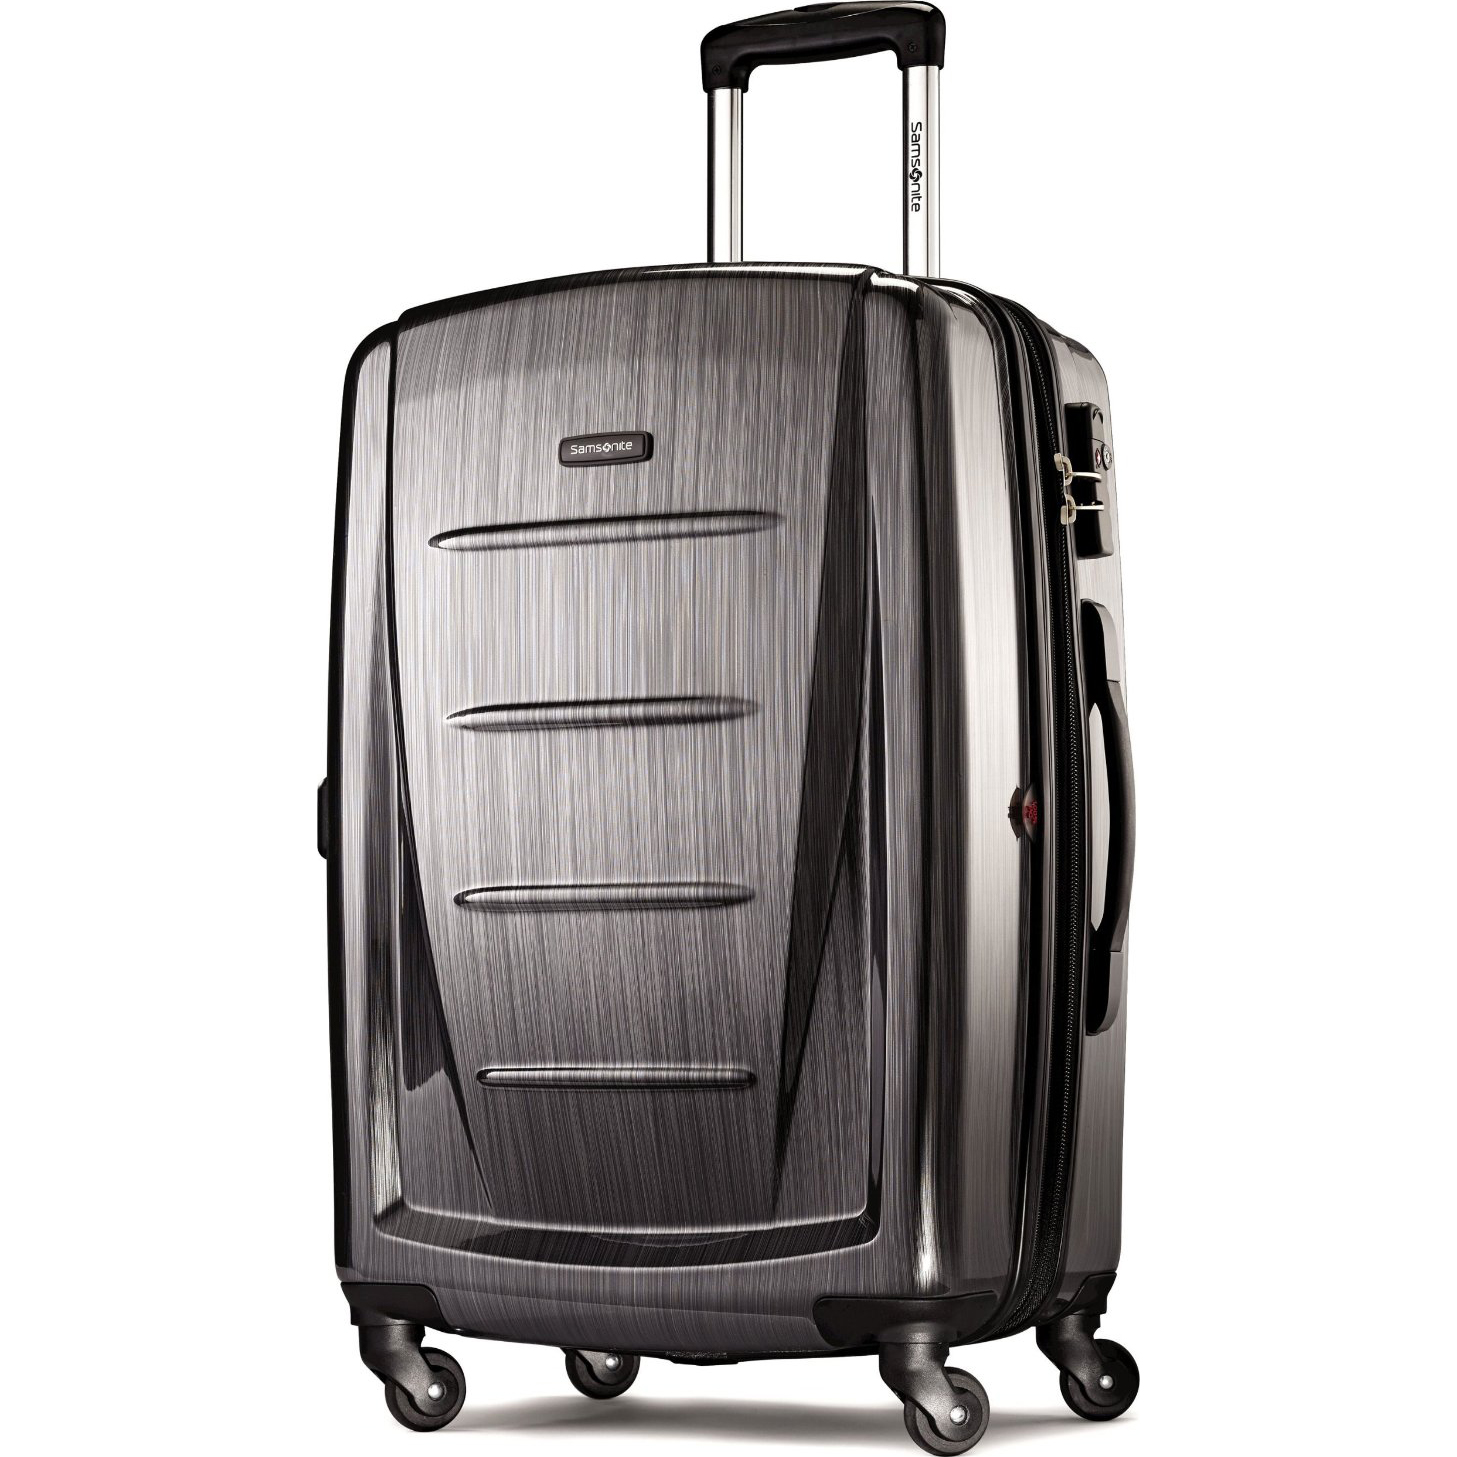 Samsonite Winfield 2 Fashion 28 Inch Hardside Spinner Suitcase Luggage